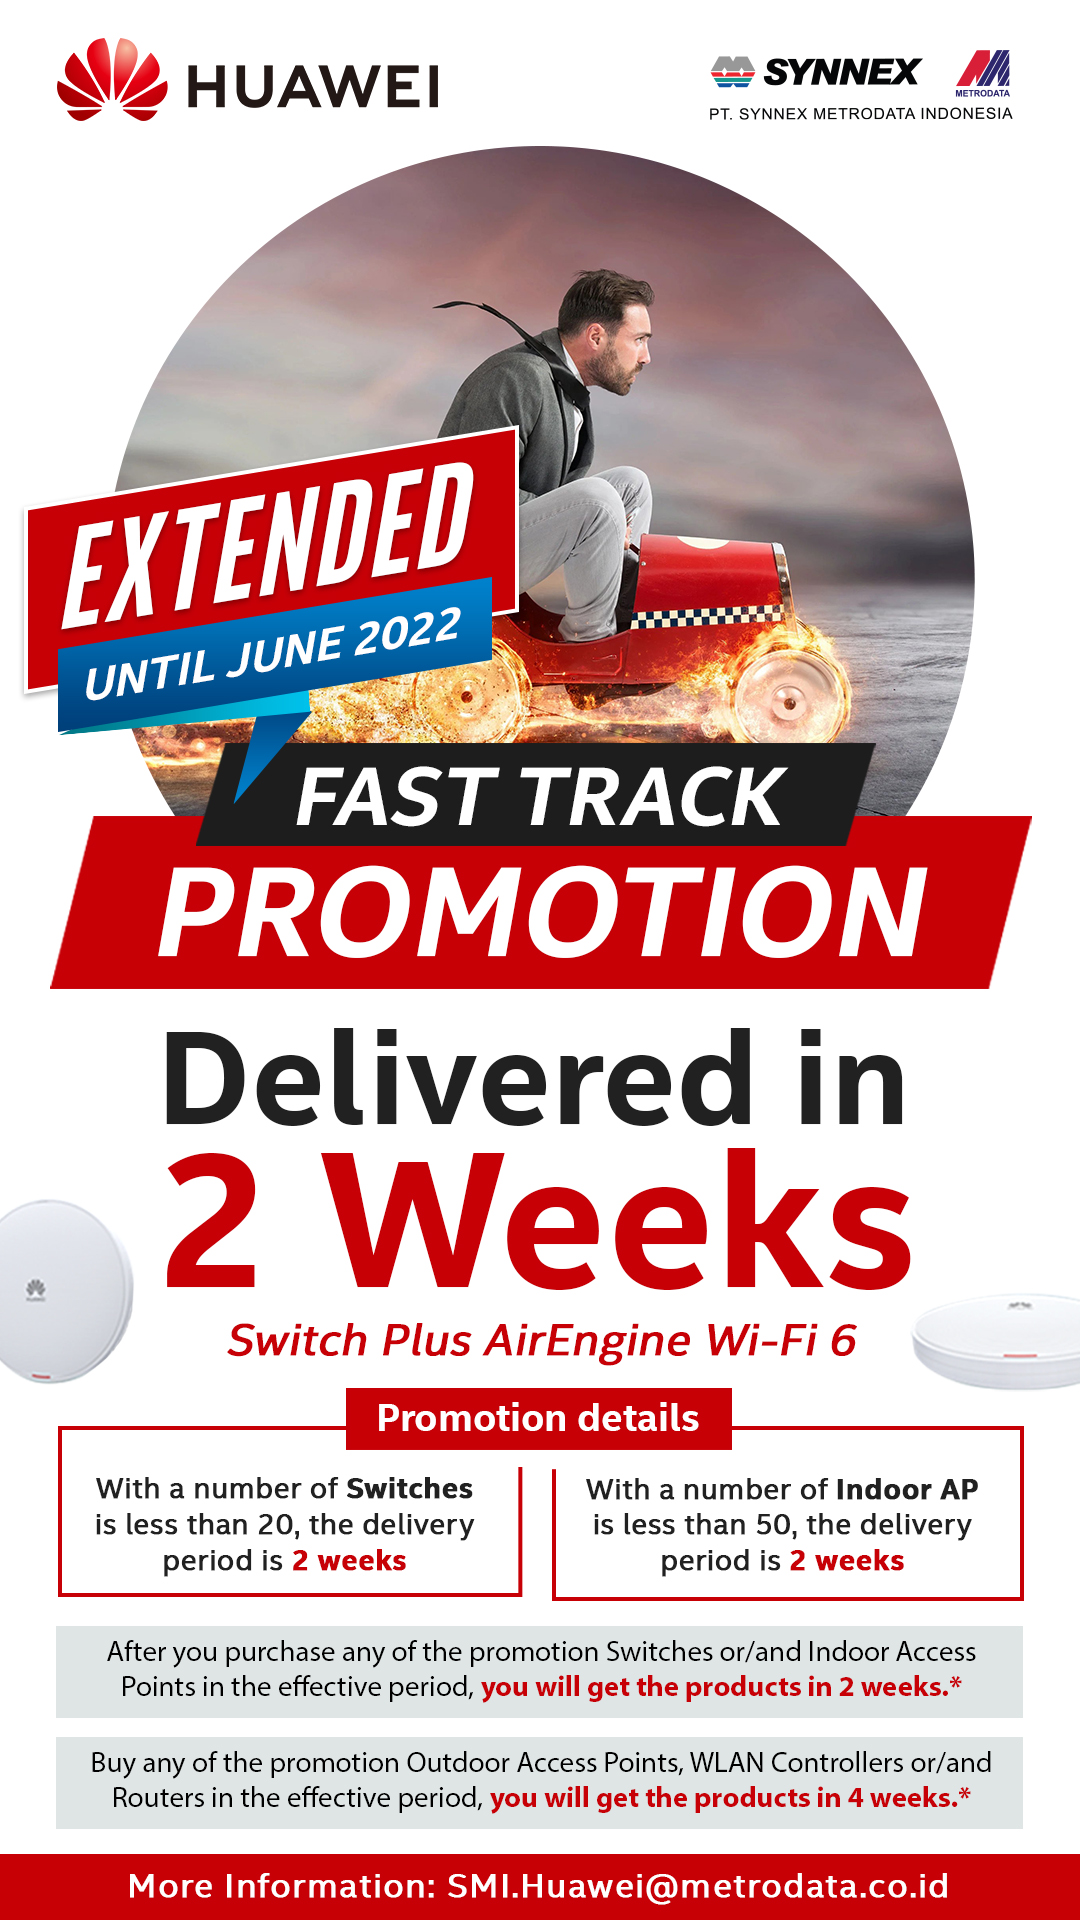 https://www.synnexmetrodata.com/wp-content/uploads/2022/05/Huawei-Fast-Track-Promotion.jpg